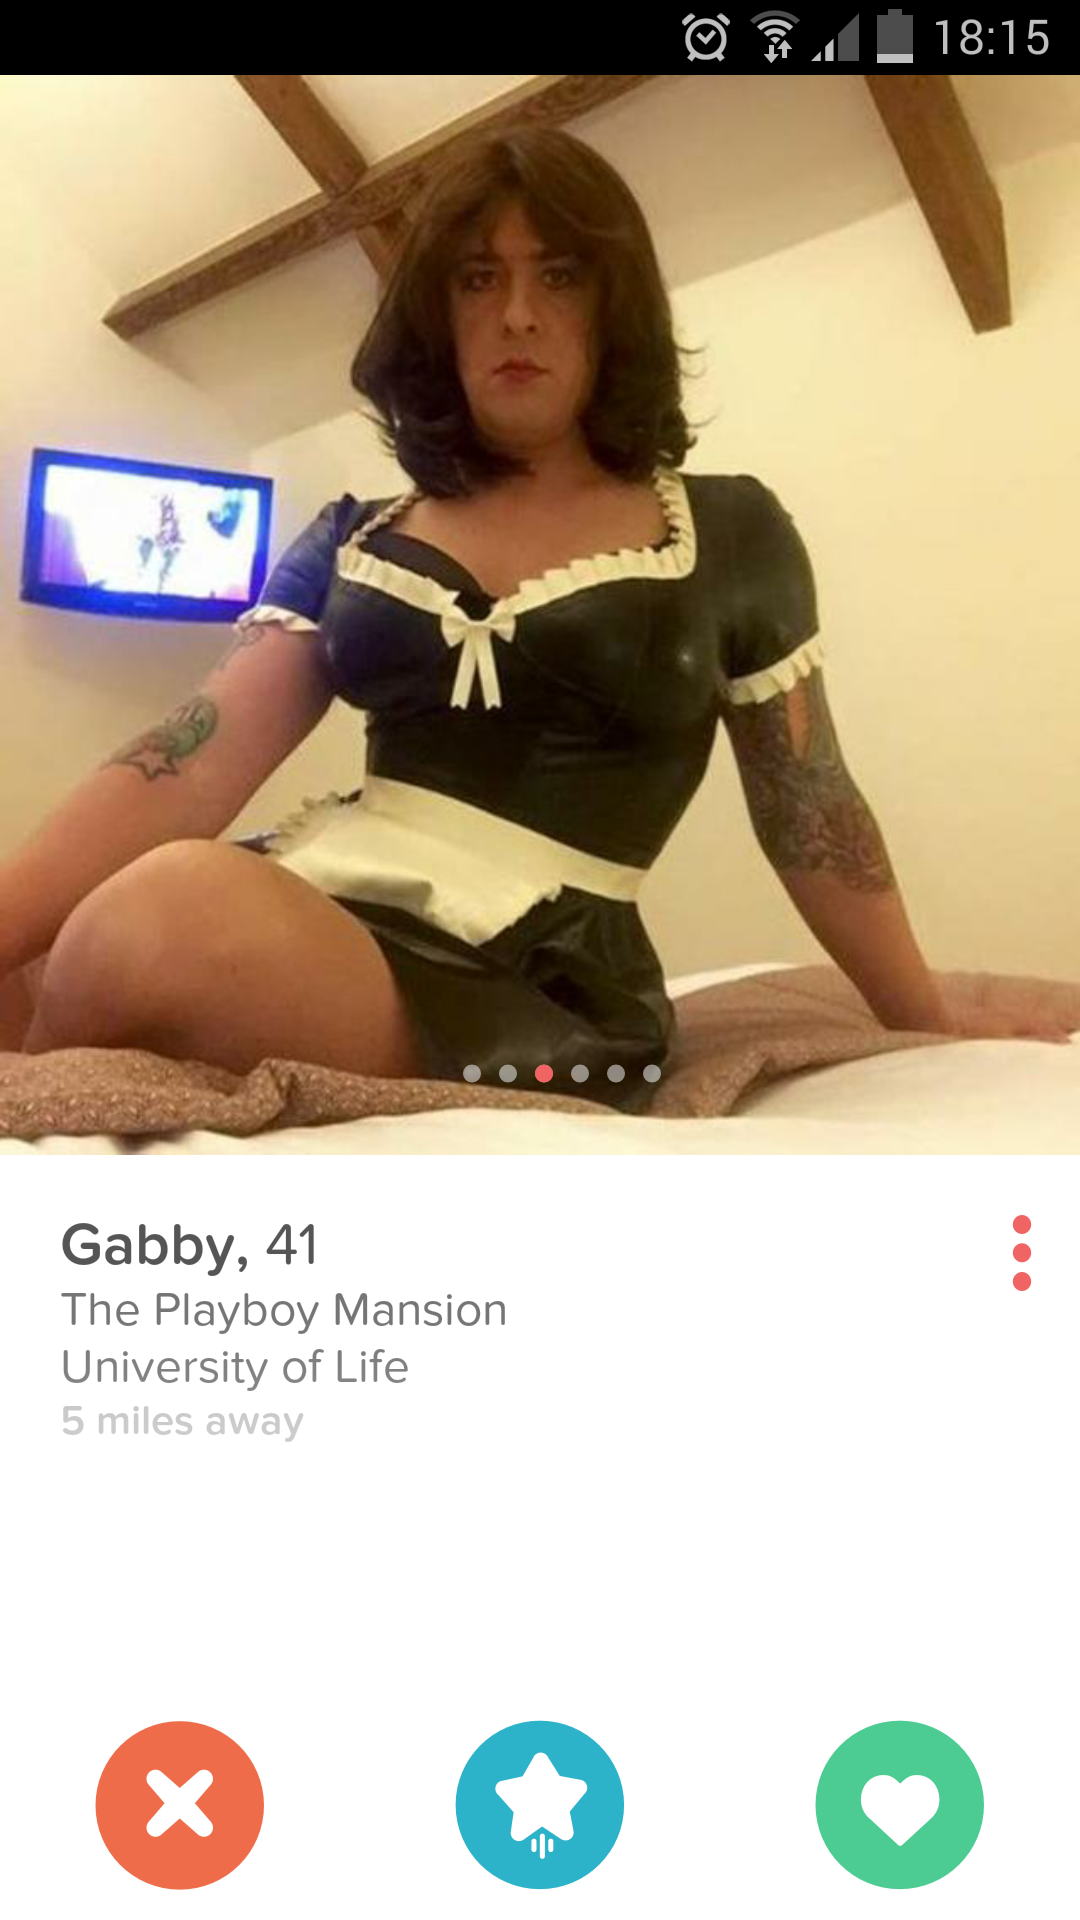 art hoe tinder - Gabby, 41 The Playboy Mansion University of Life Smile Wav